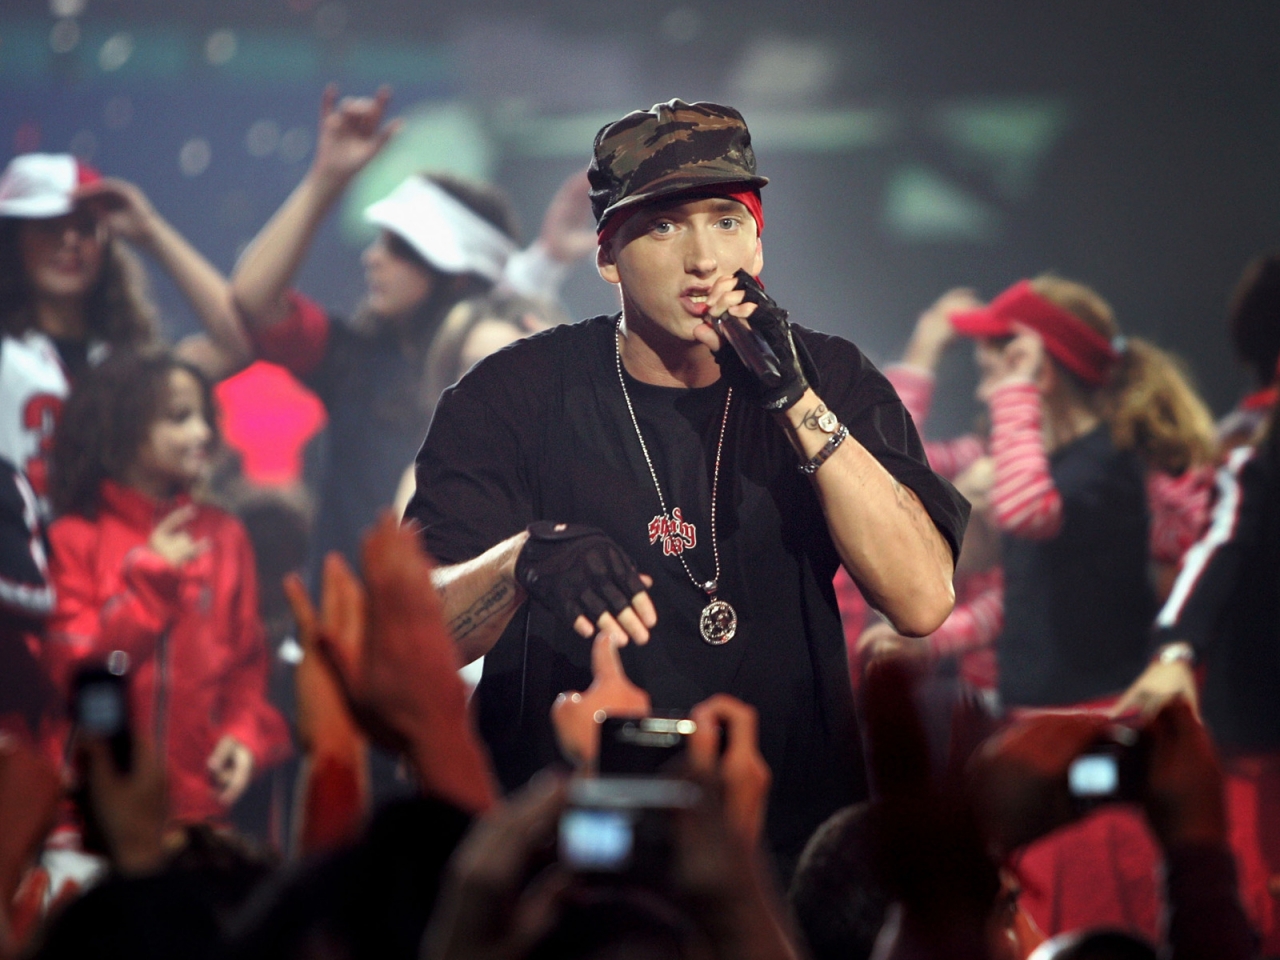 Eminem for 1280 x 960 resolution